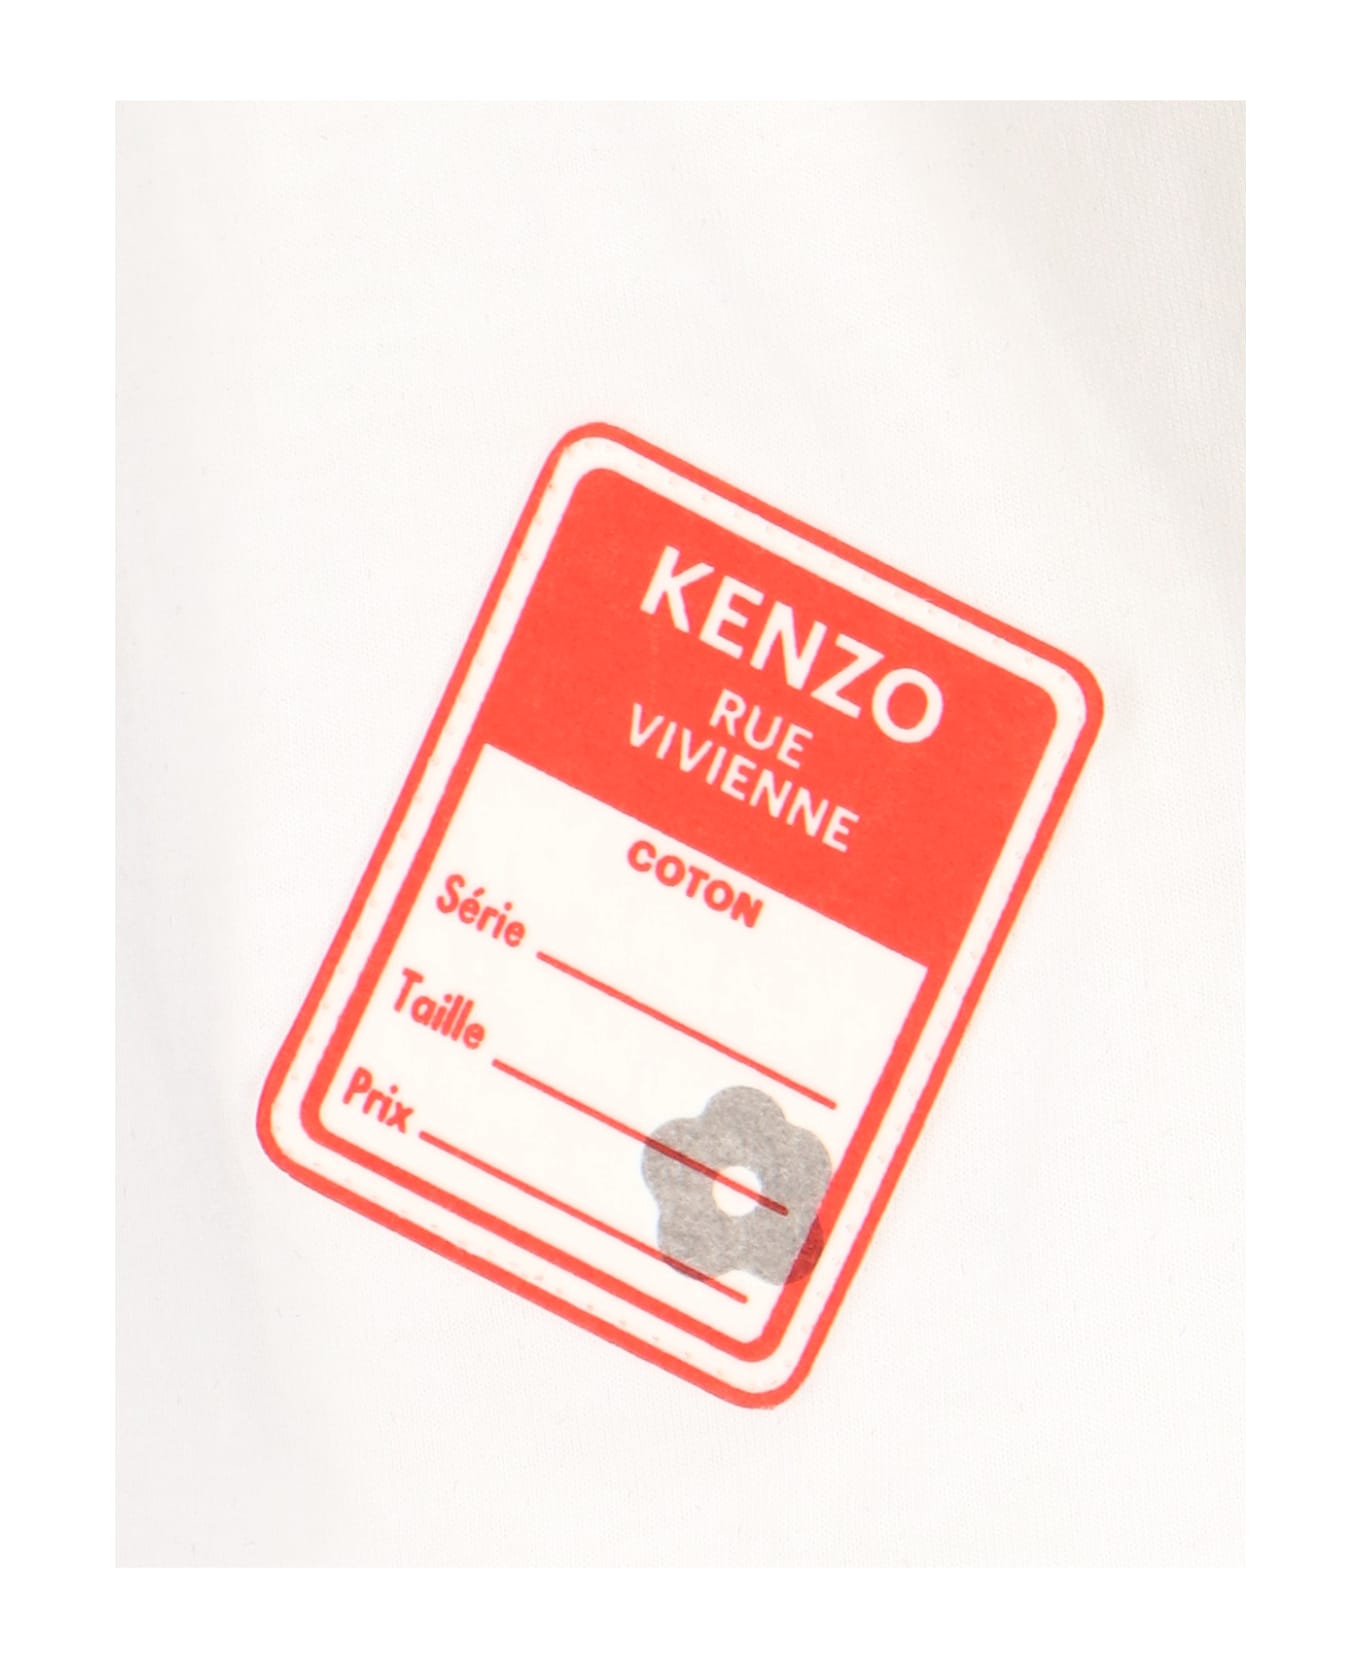 Kenzo Printed Cotton T-shirt - Cream